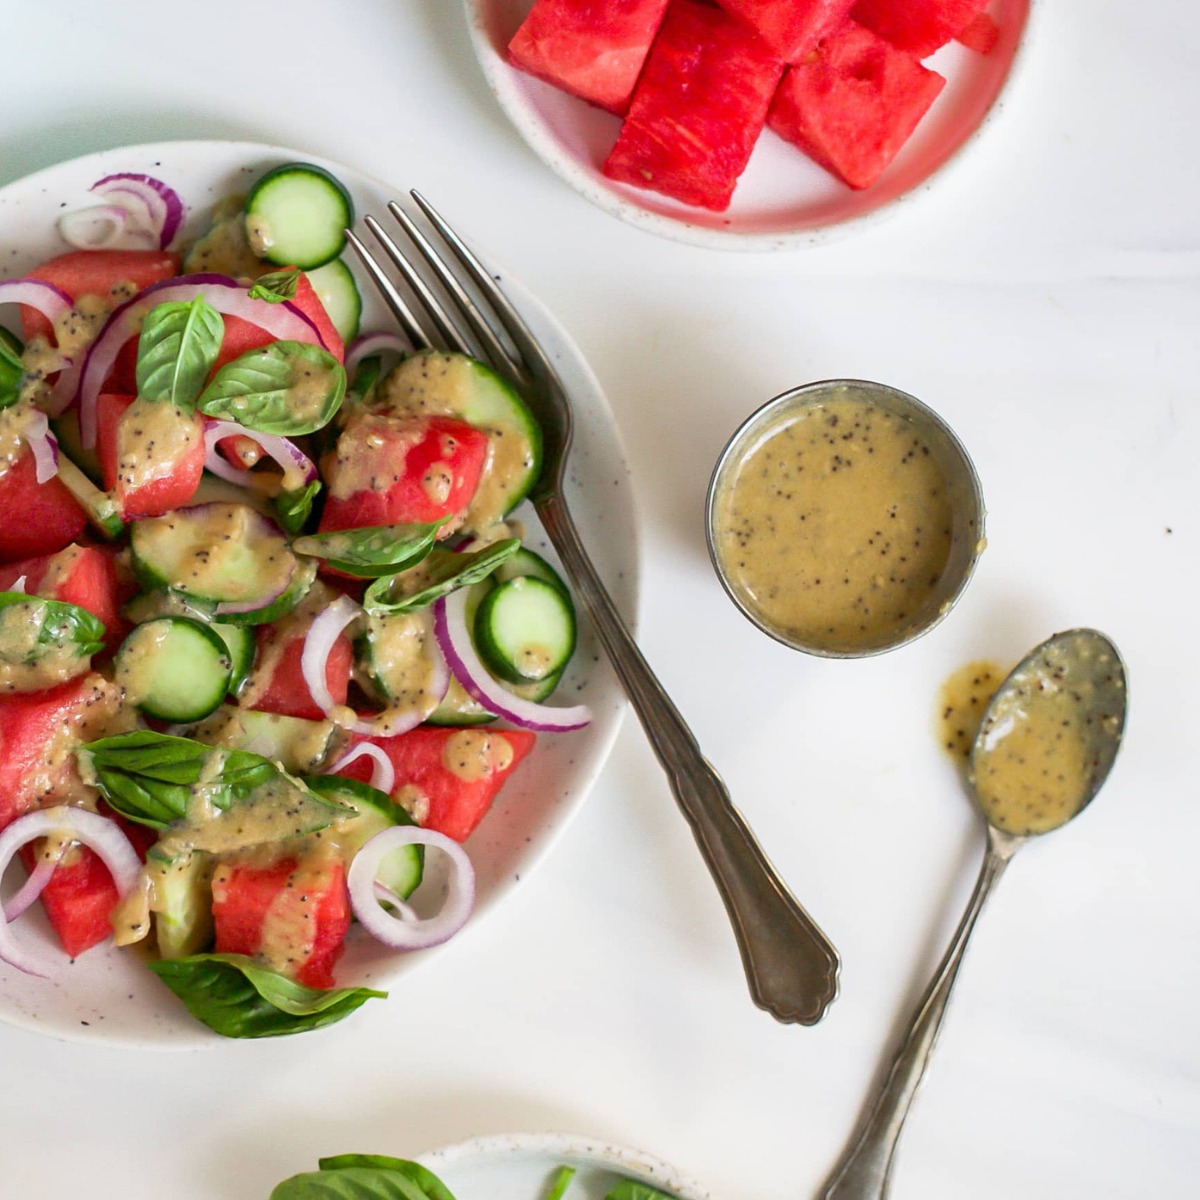 Mother Raw Organic Vegan Poppy Seed Dressing on Salad